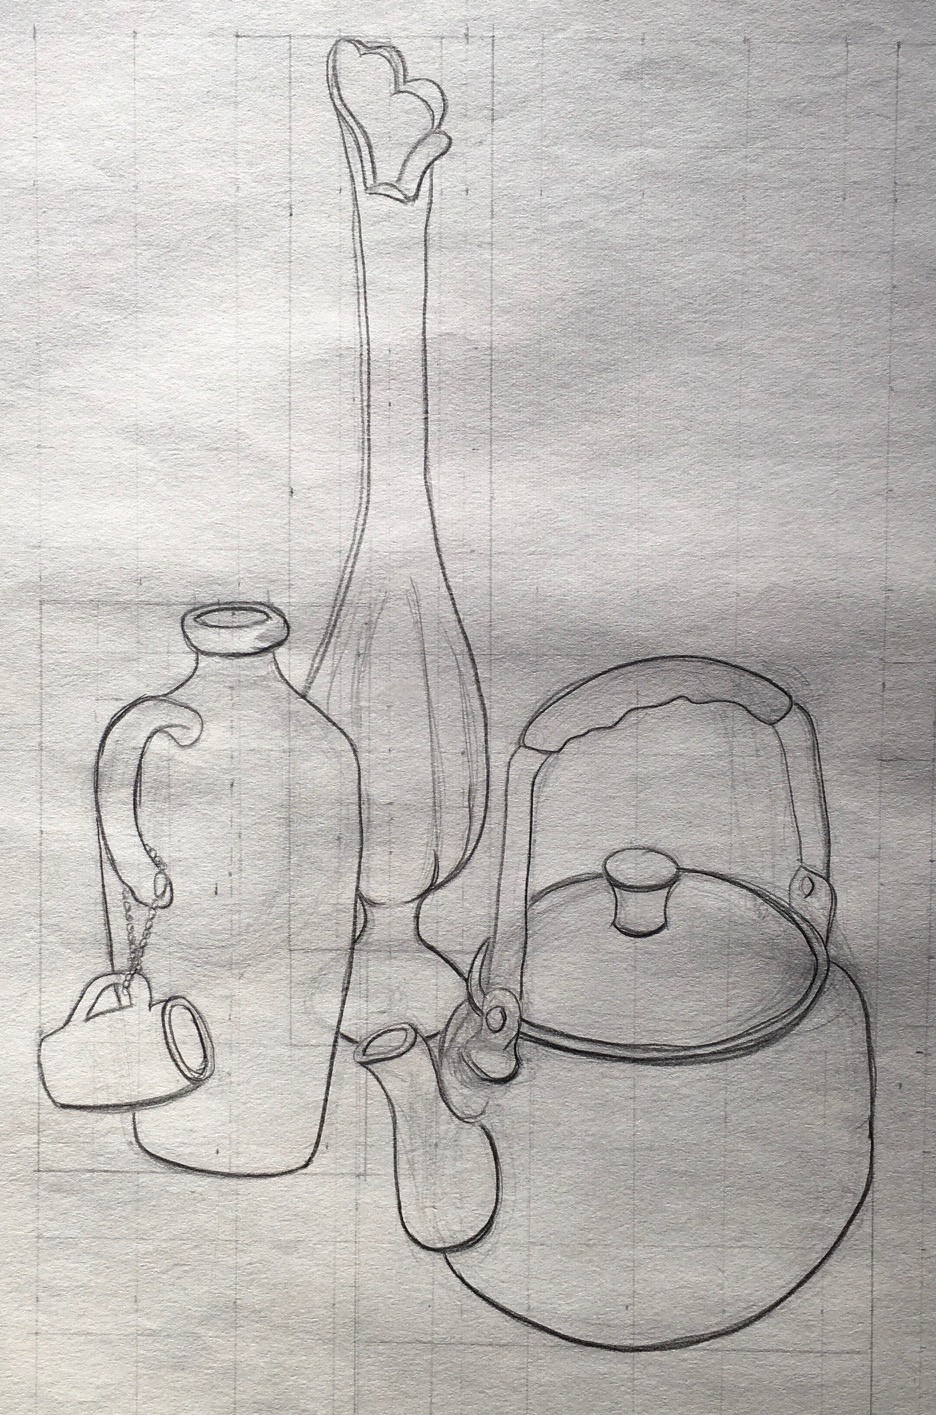 Jug Vase Teapot, 2018
Pencil on Paper
9.5"W x 14"H, Walli White, artist